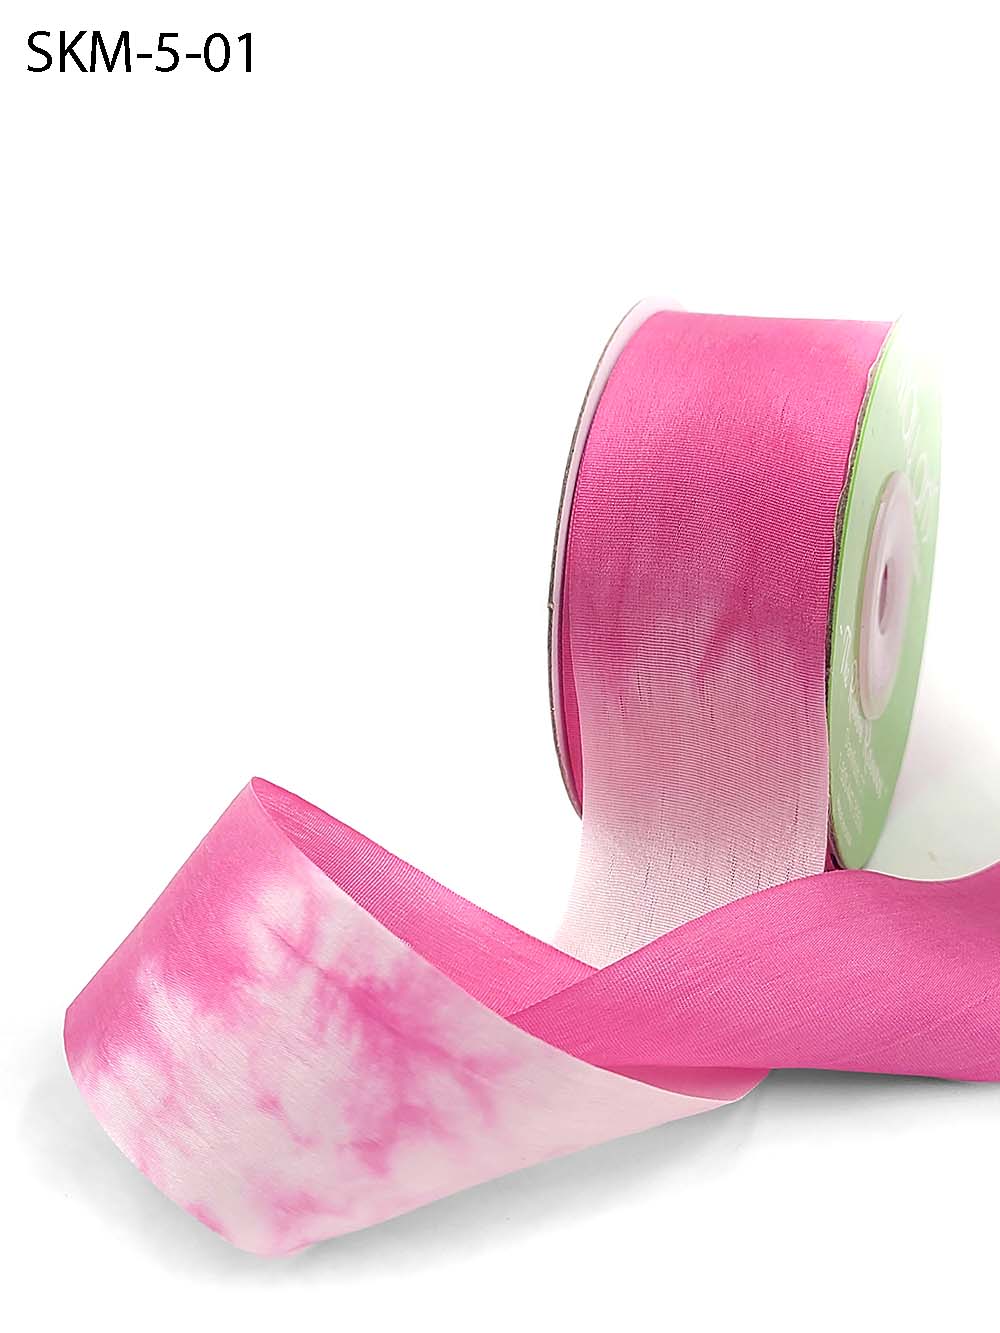 Echinacea ribbon setGibb & Hiney, hand-dyed silk ribbon, 5 colors